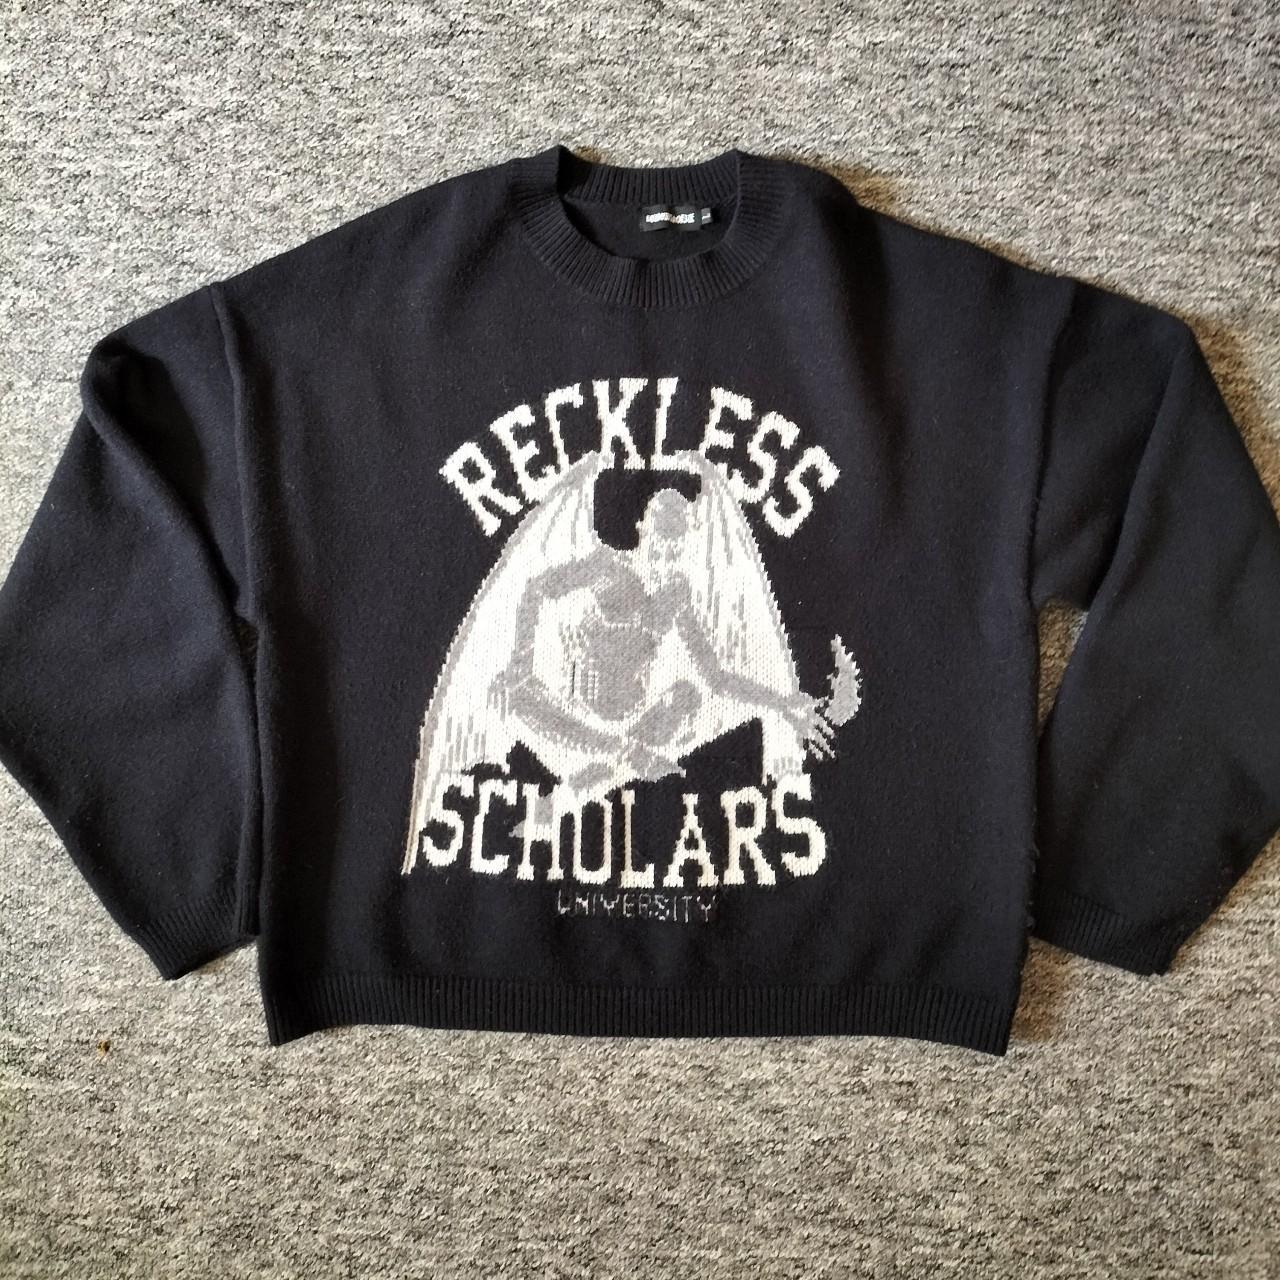 Reckless Scholars University knitsweater